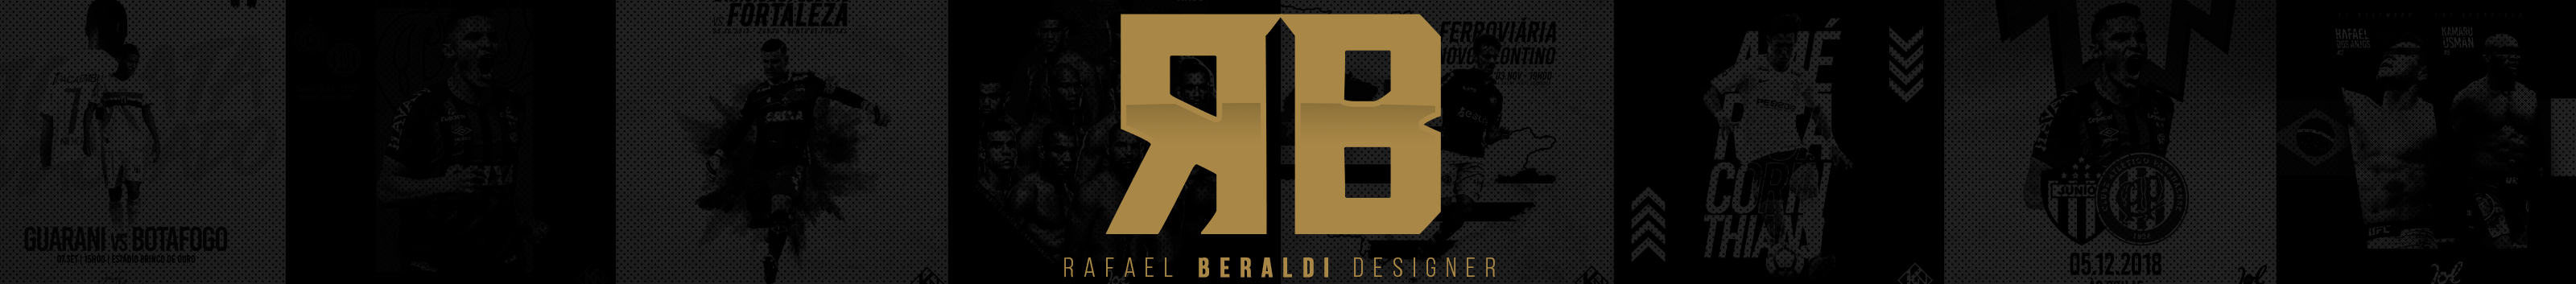 Баннер профиля Rafael Beraldi